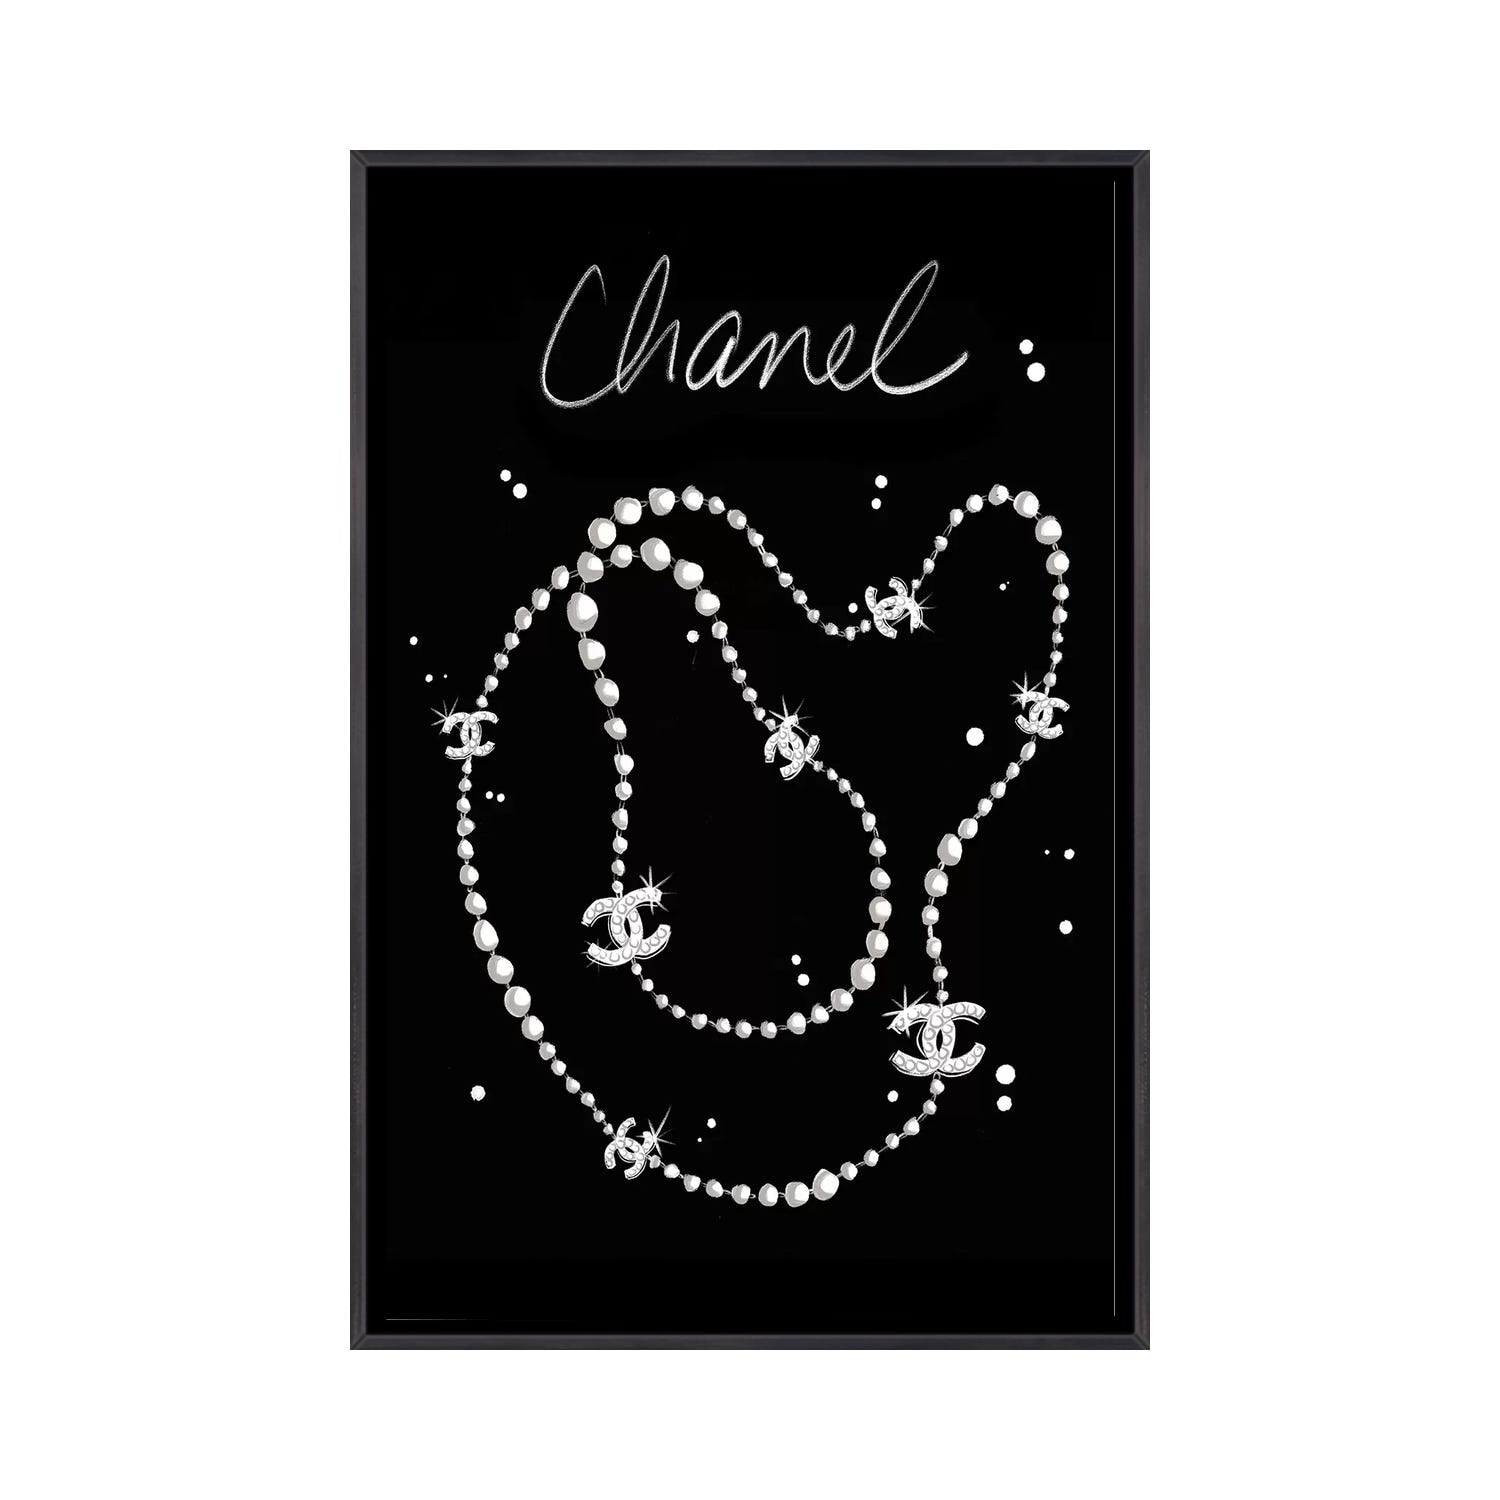 iCanvas Chanel Necklace by La femme Jojo Framed